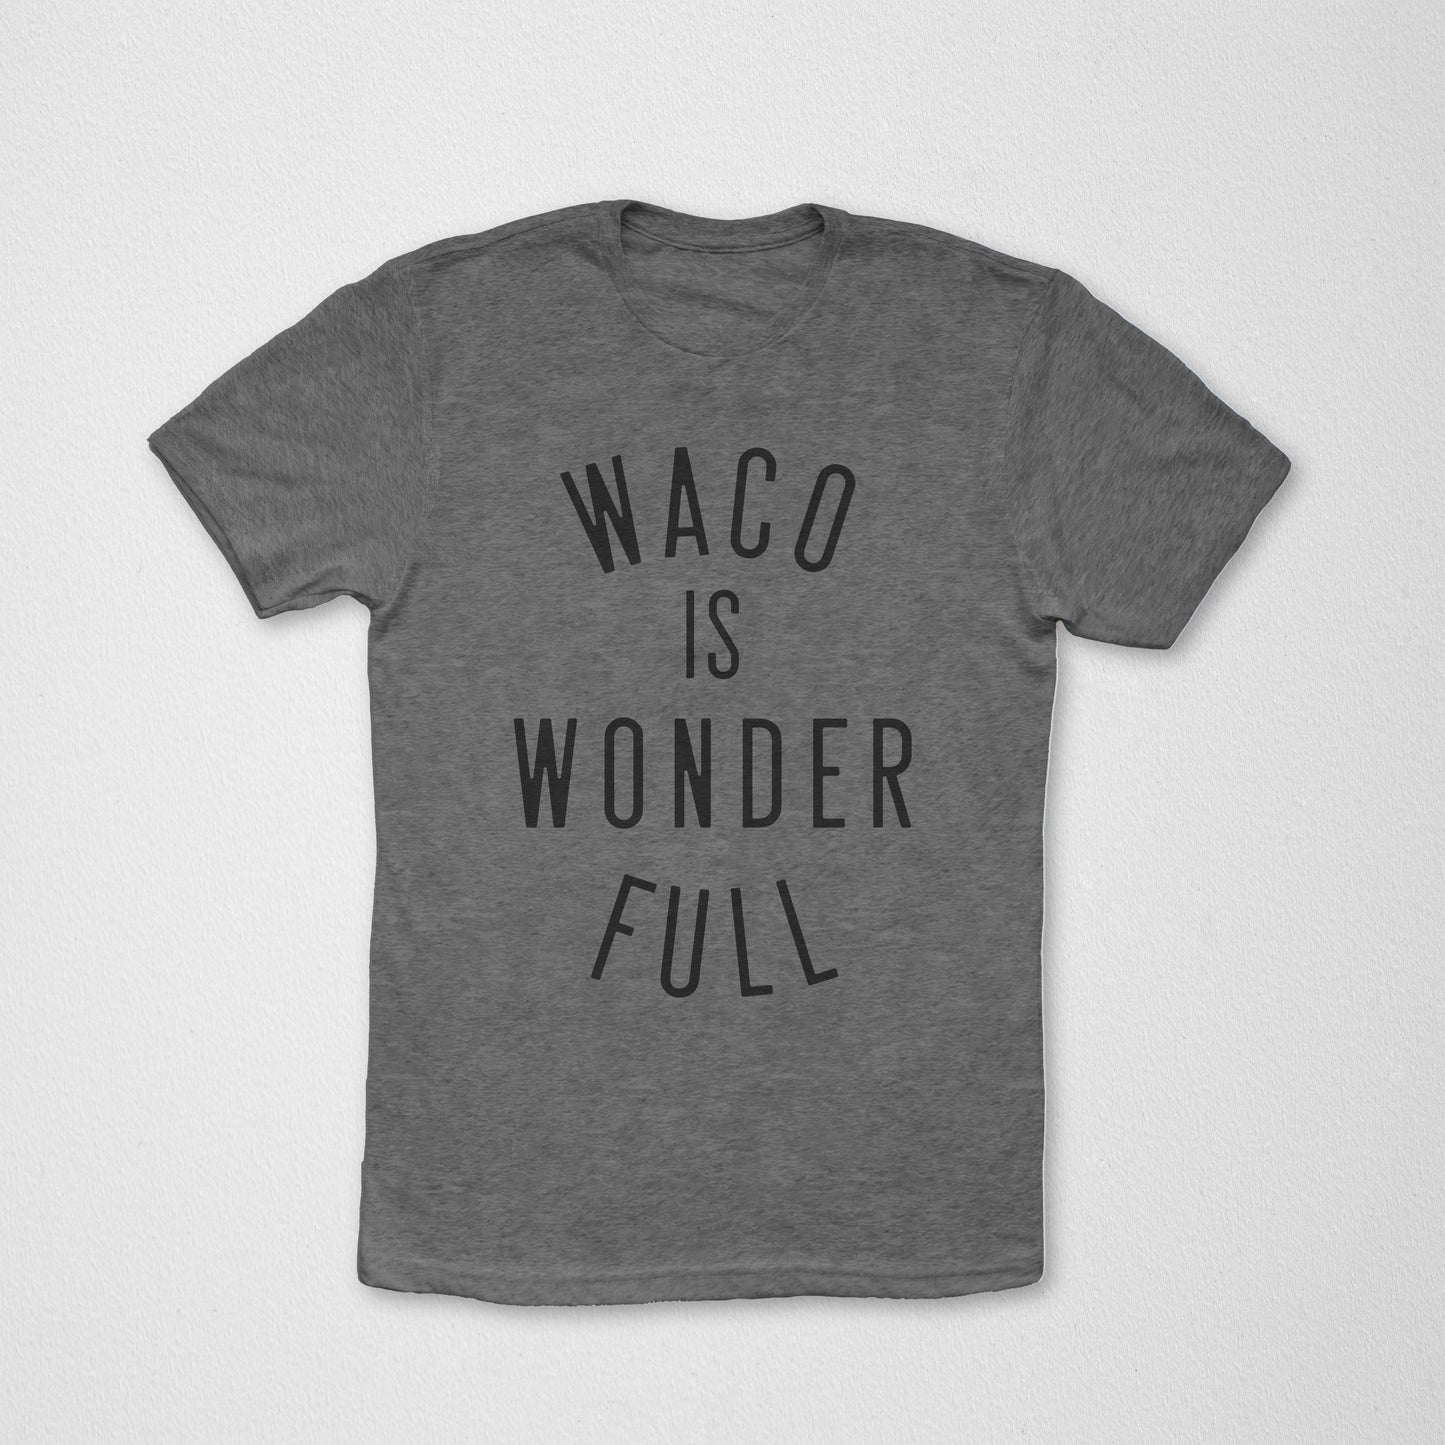 Waco is Wonder Full